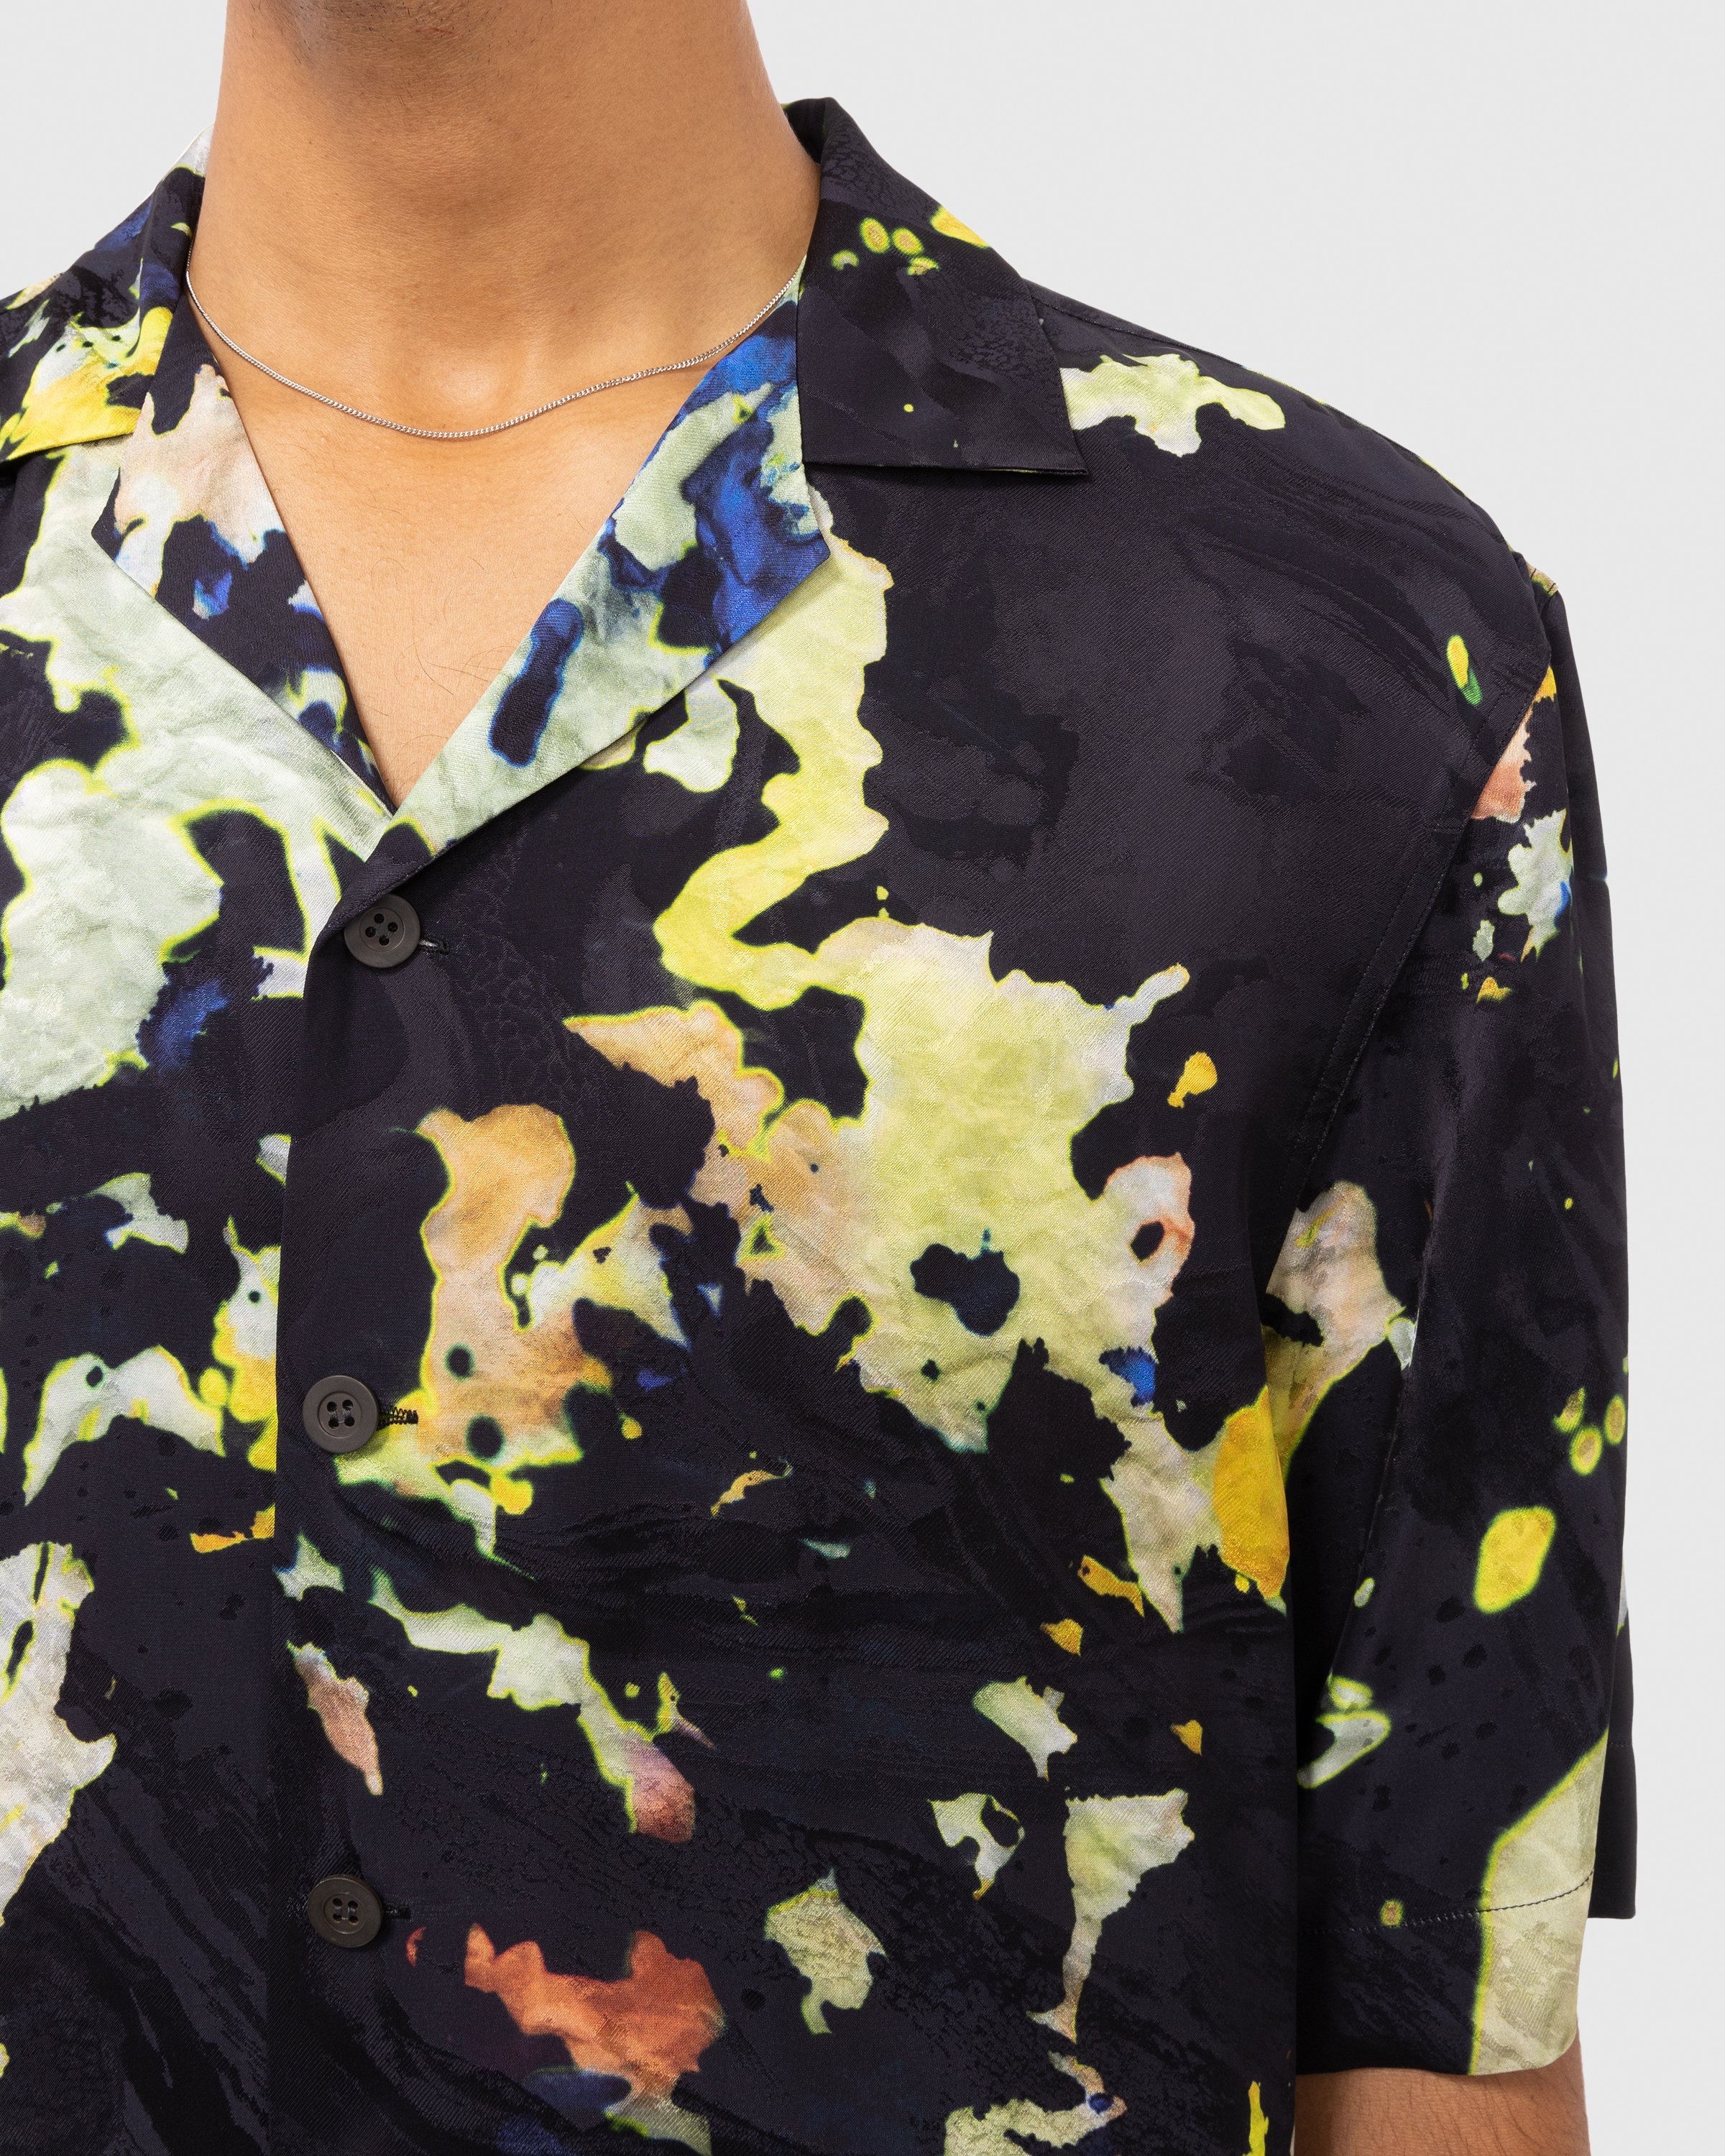 Dries van Noten - Jacquard Cassi Shirt Multi - Clothing - Multi - Image 5